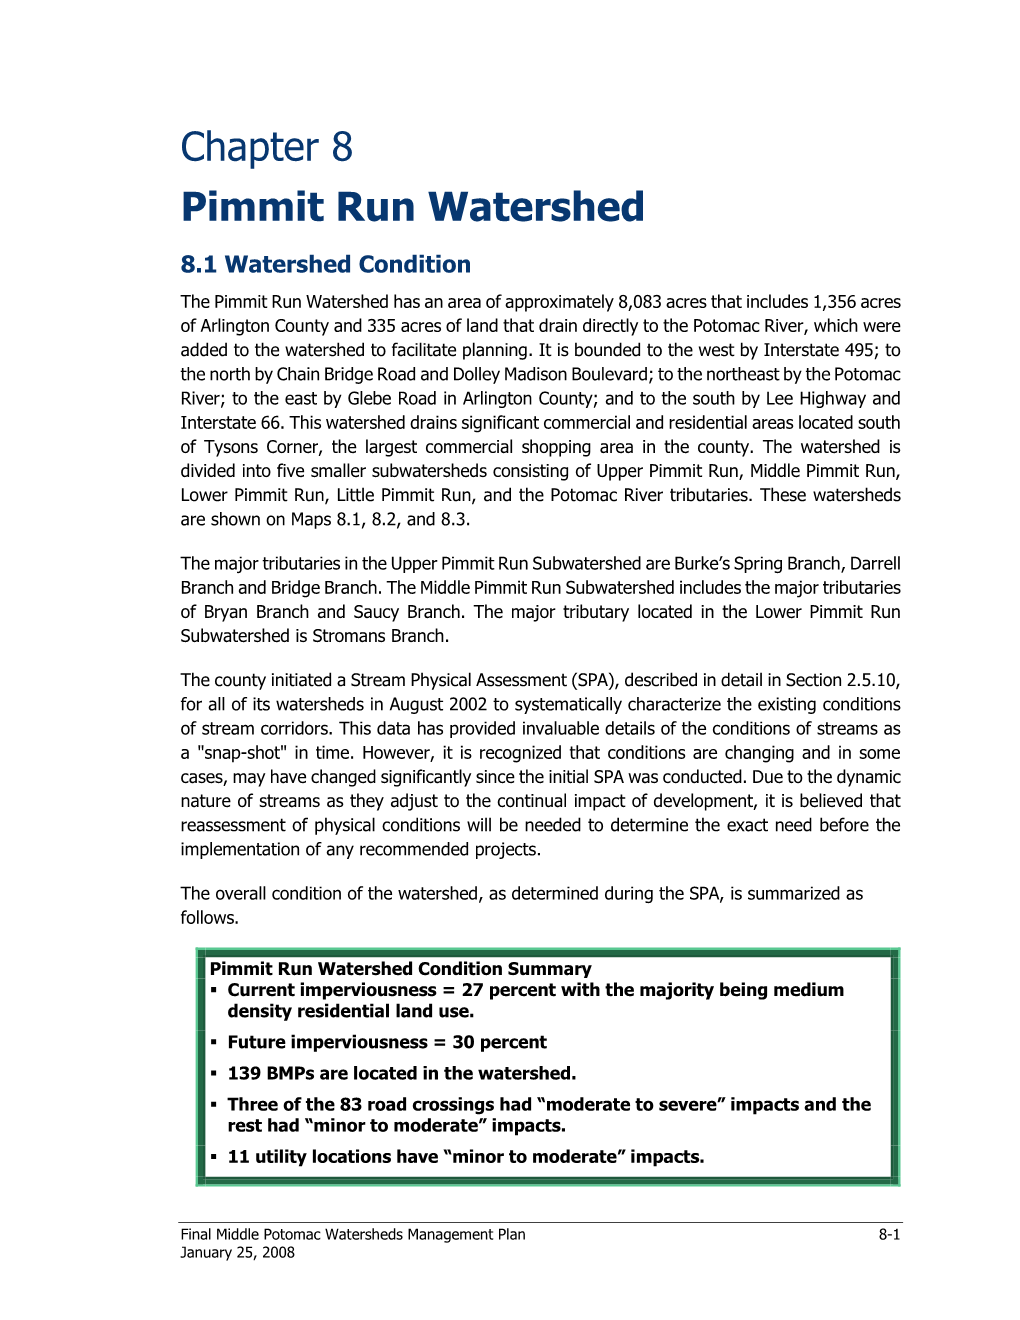 Pimmit Run Watershed